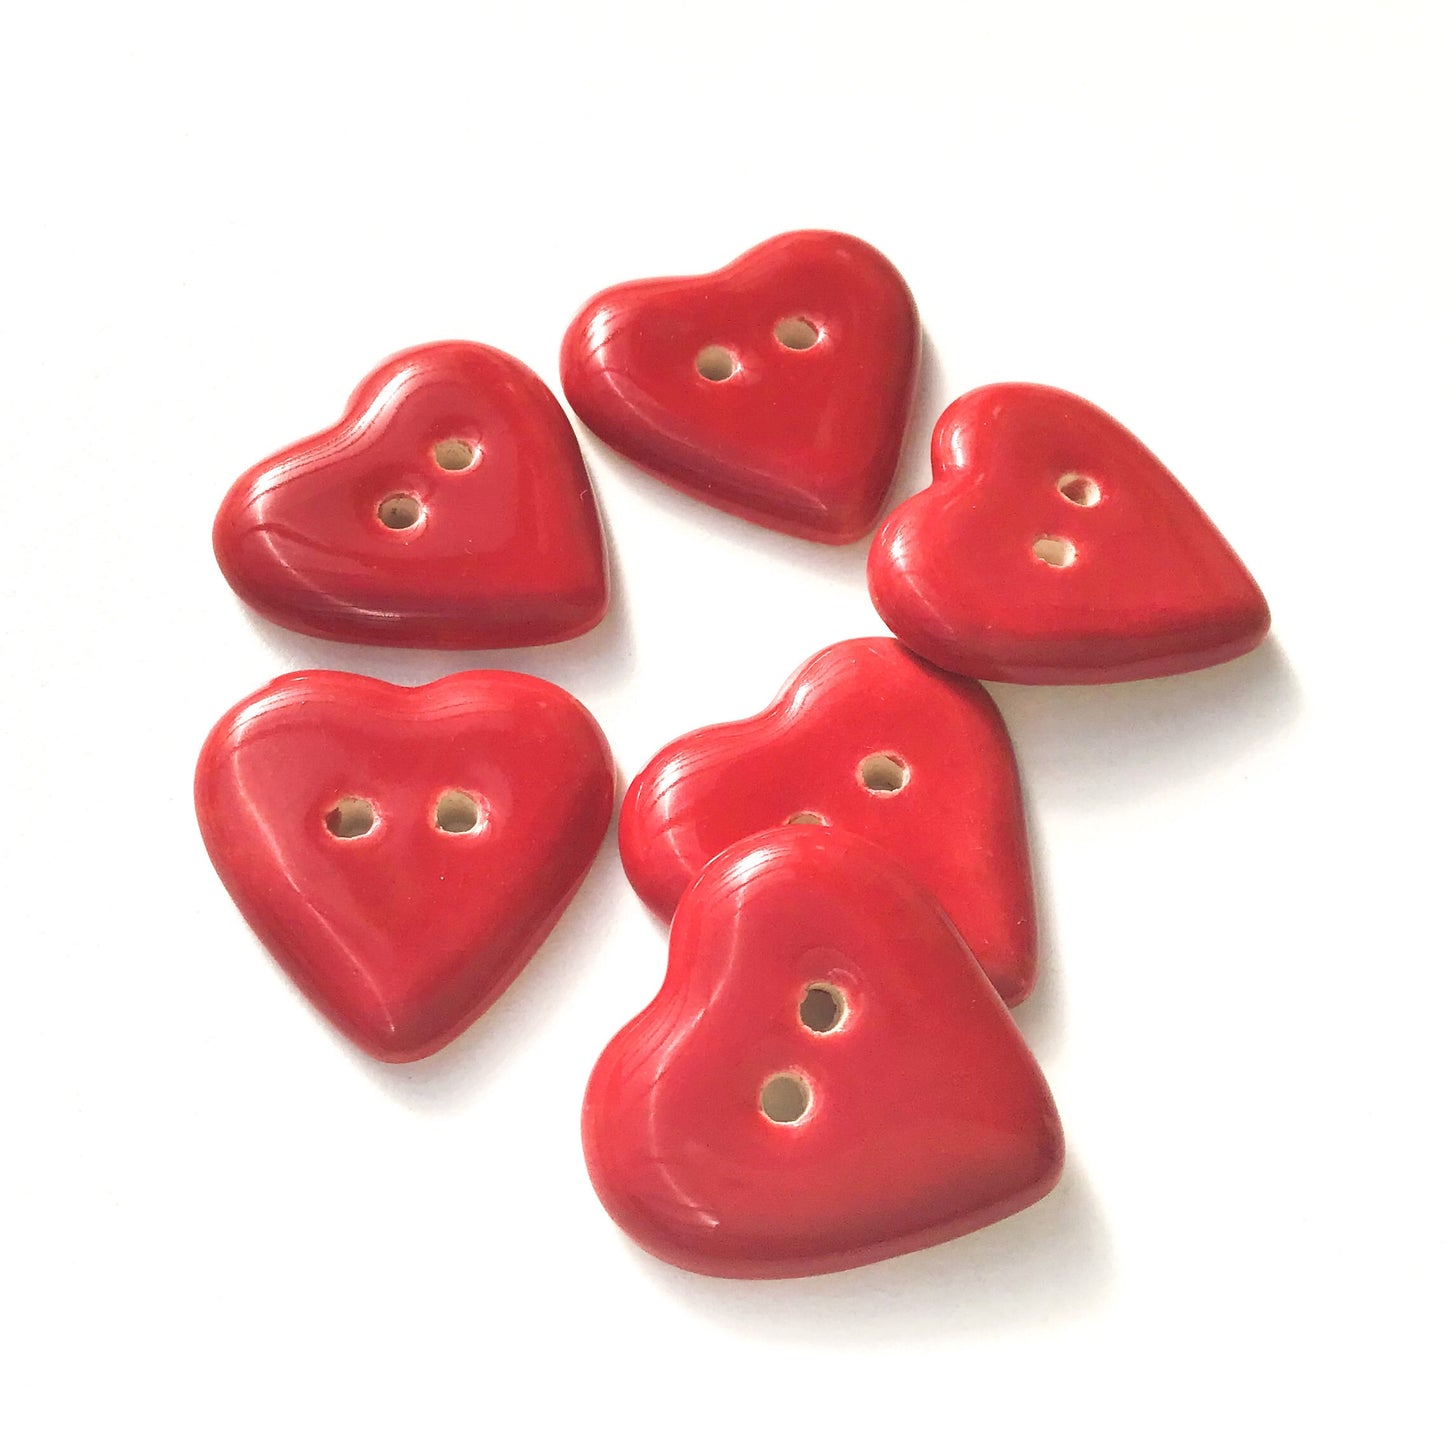 Deep Red Heart Buttons - Ceramic Heart Buttons - 7/8" - 6 Pack (ws-79)